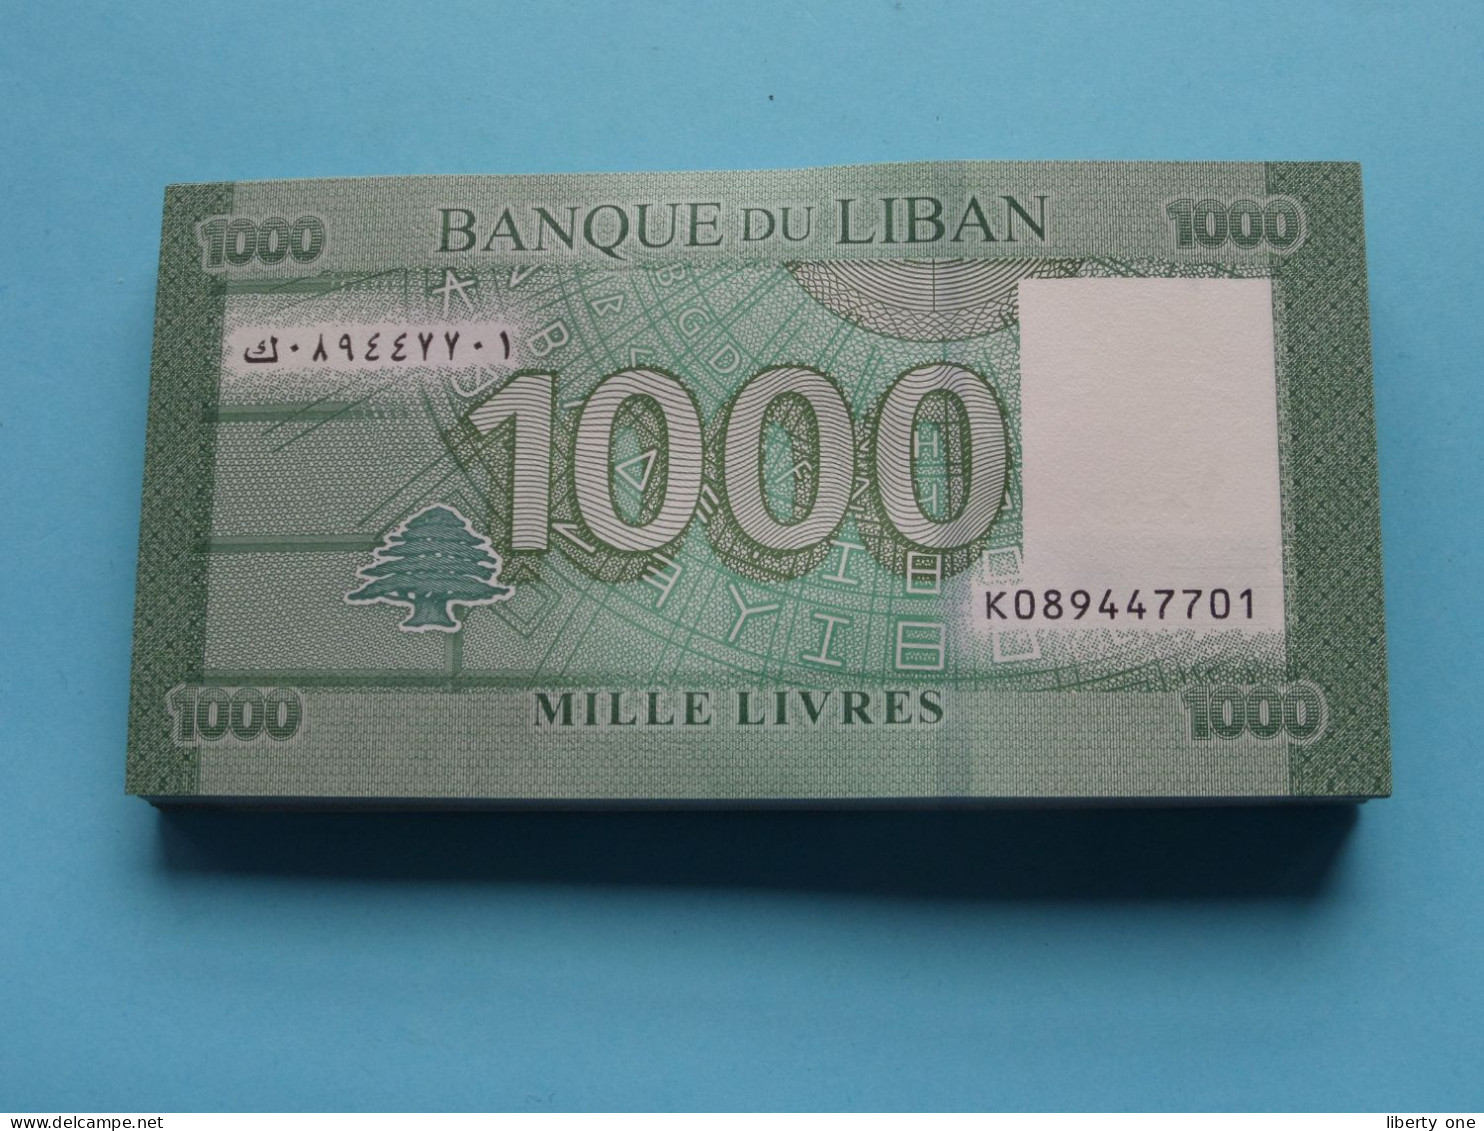 1000 Livres Mille ( Banque De Liban ) Lebanon 2016 ( For Grade, Please See SCANS ) UNC ! - Lebanon